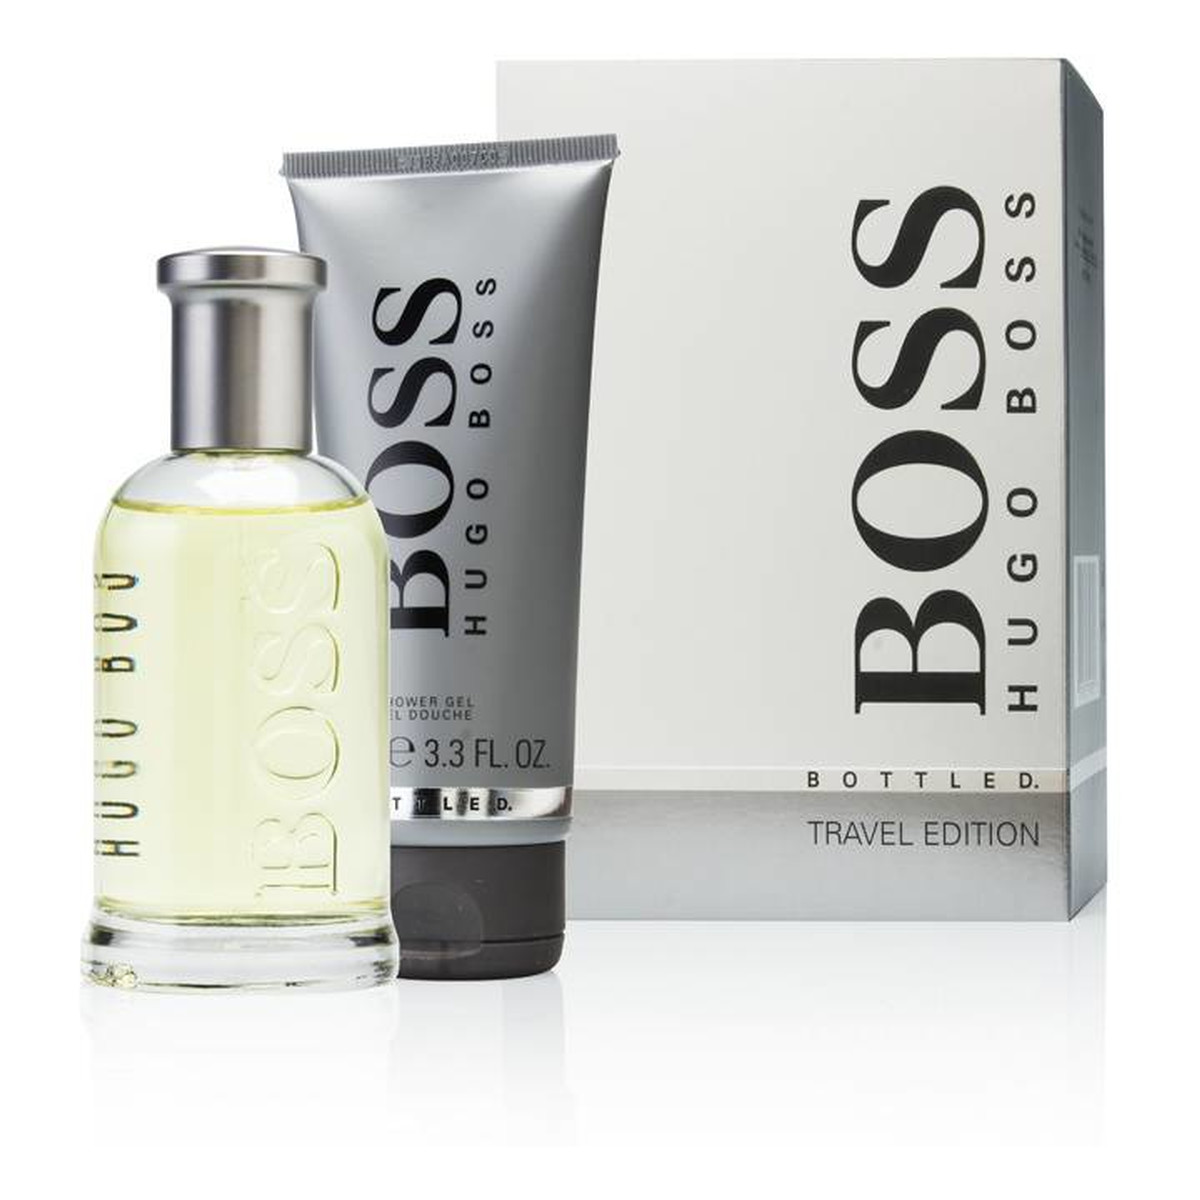 Hugo Boss Boss Bottled zestaw upominkowy (woda toaletowa 100ml + Żel pod prysznic 100ml)